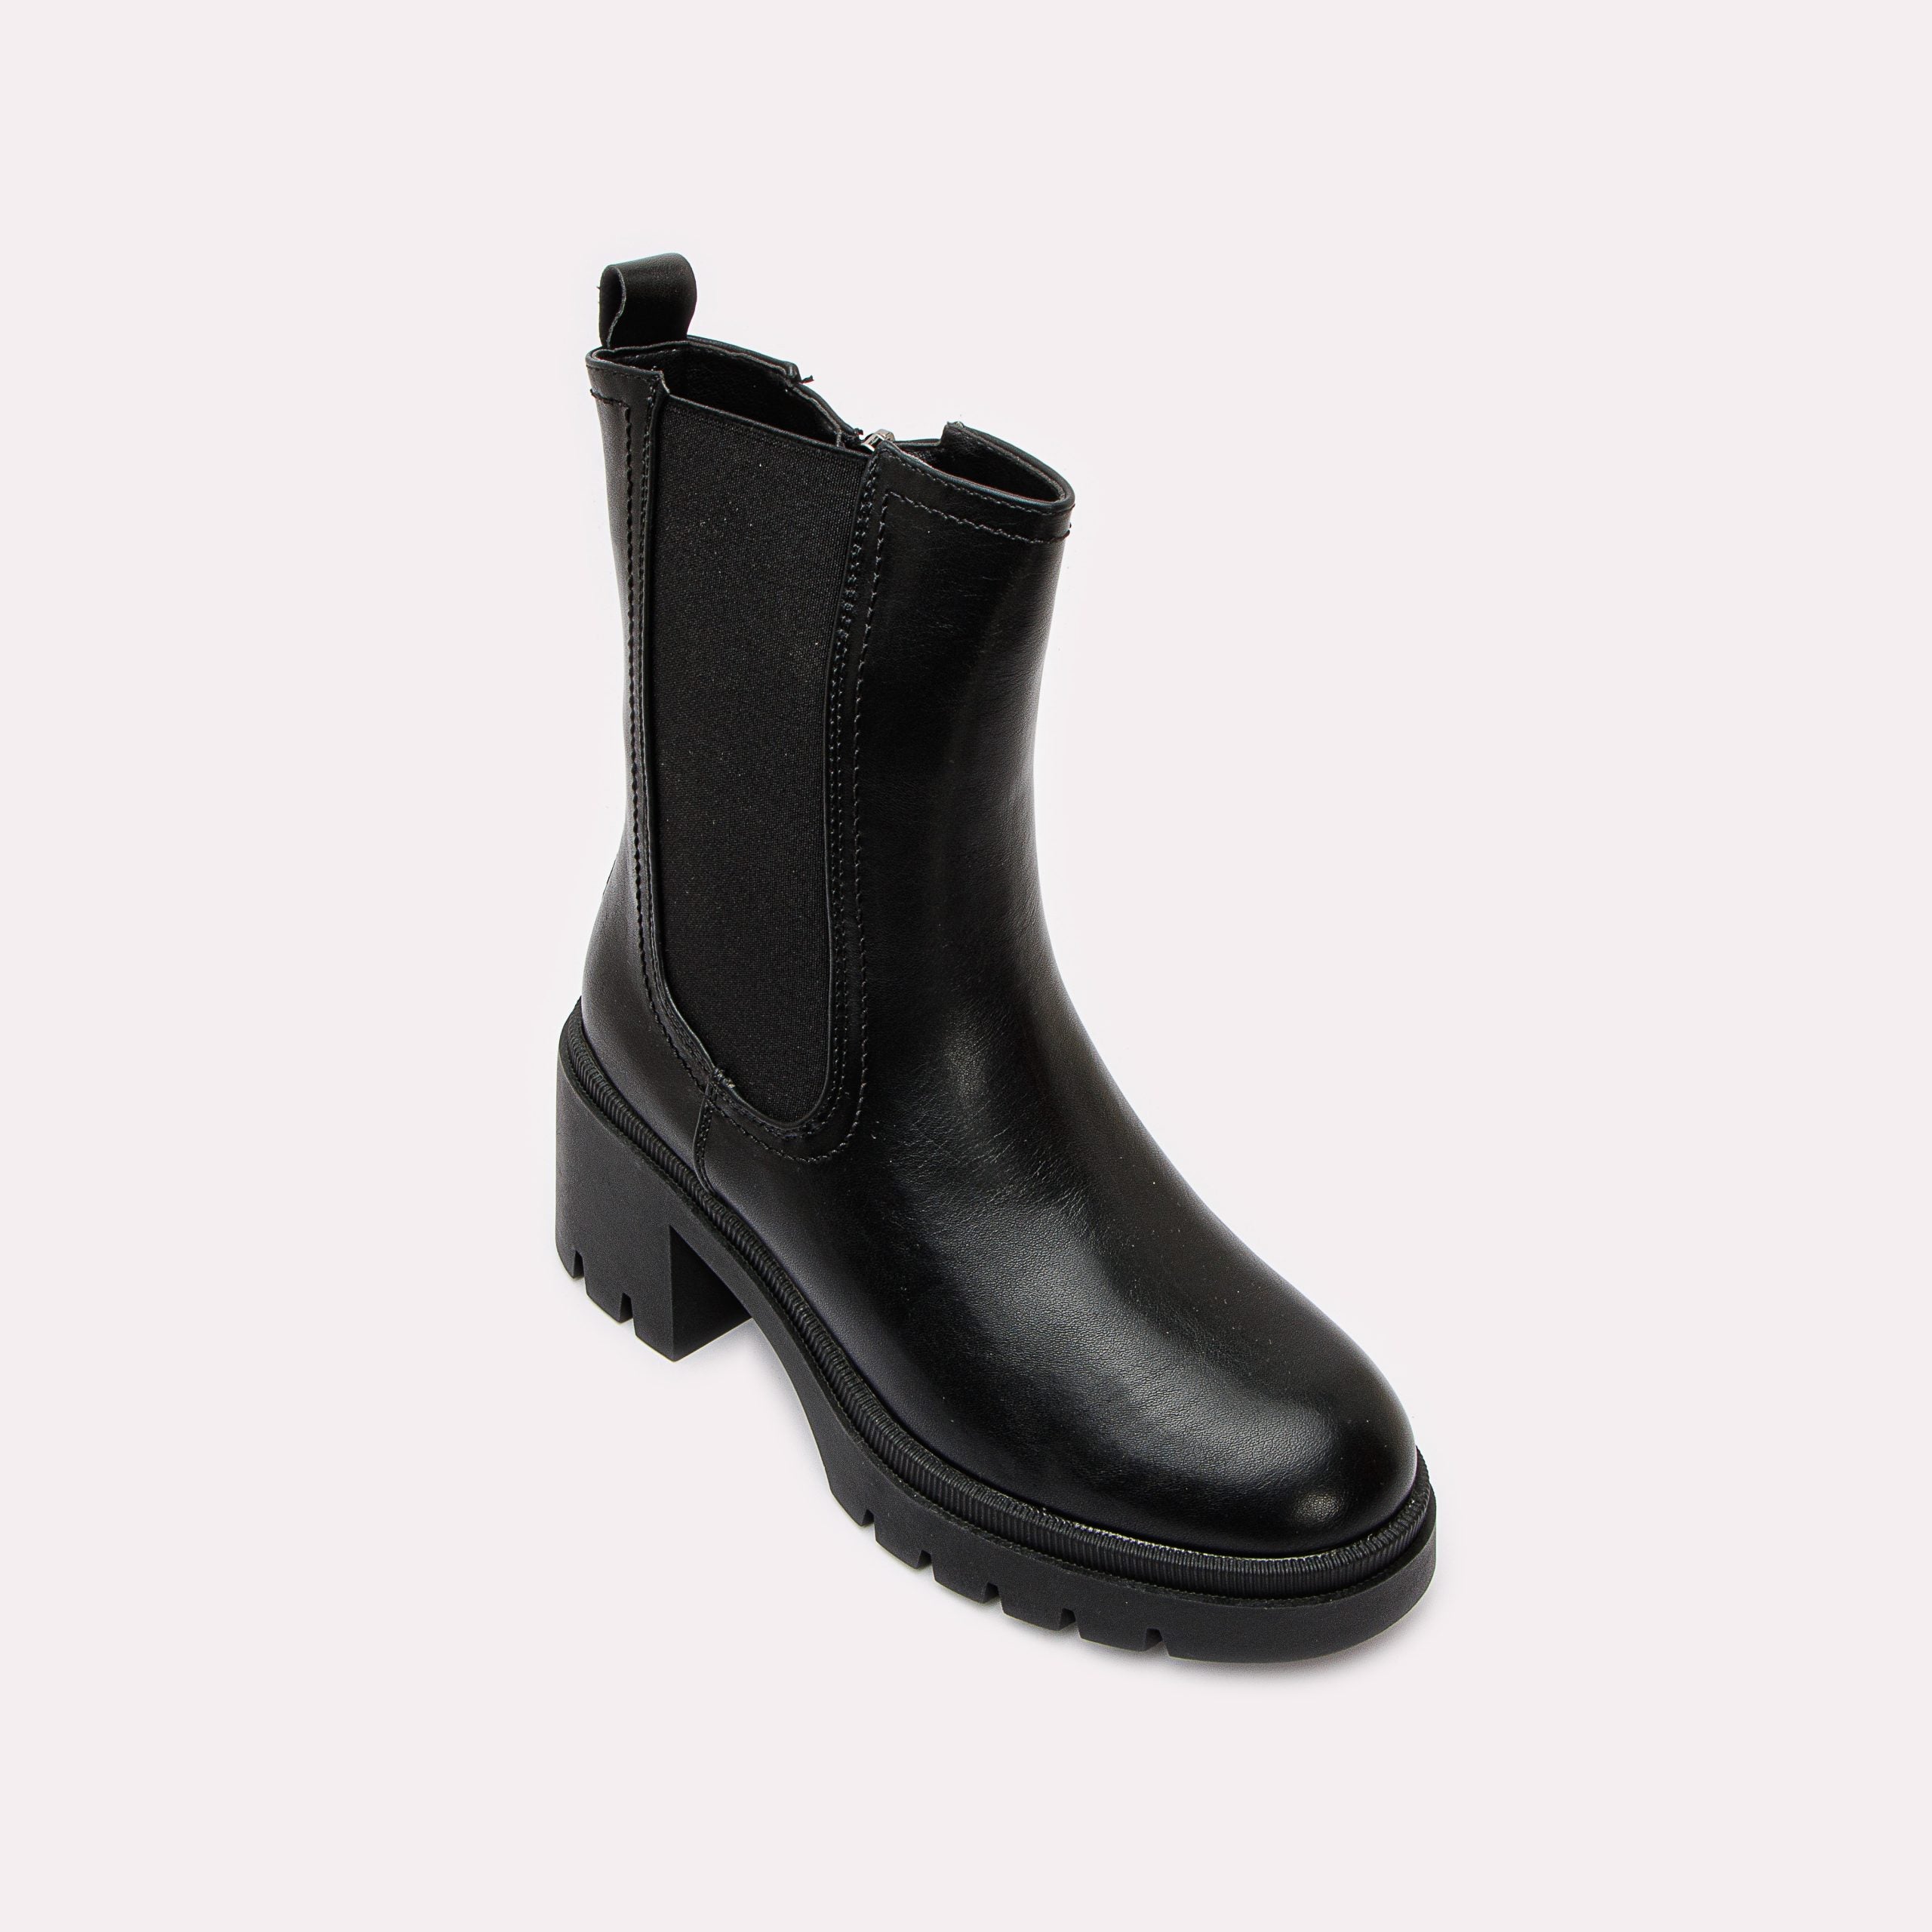 Shoeroom Half Boot For Women 2940